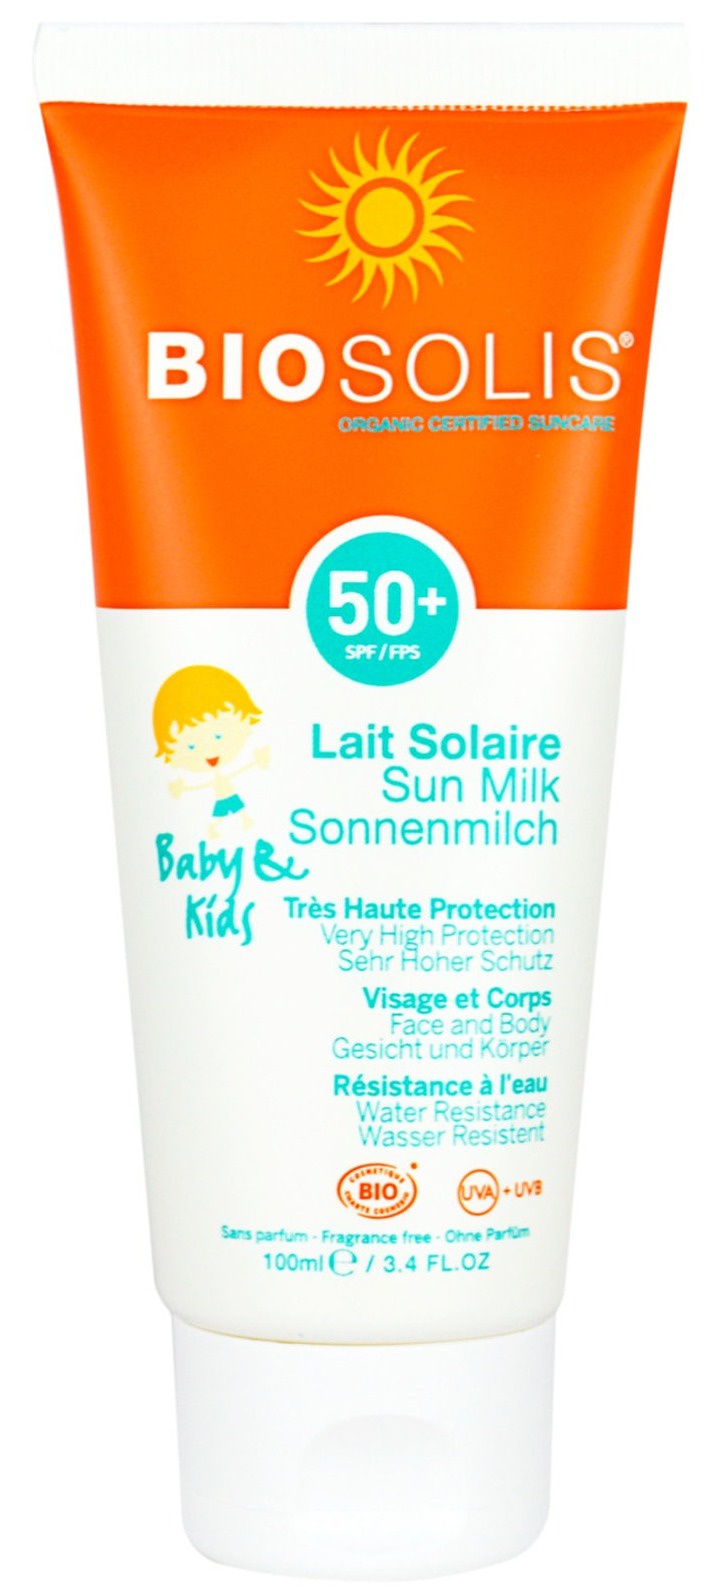 Biosolis Baby & Kids Sun Milk SPF50 +